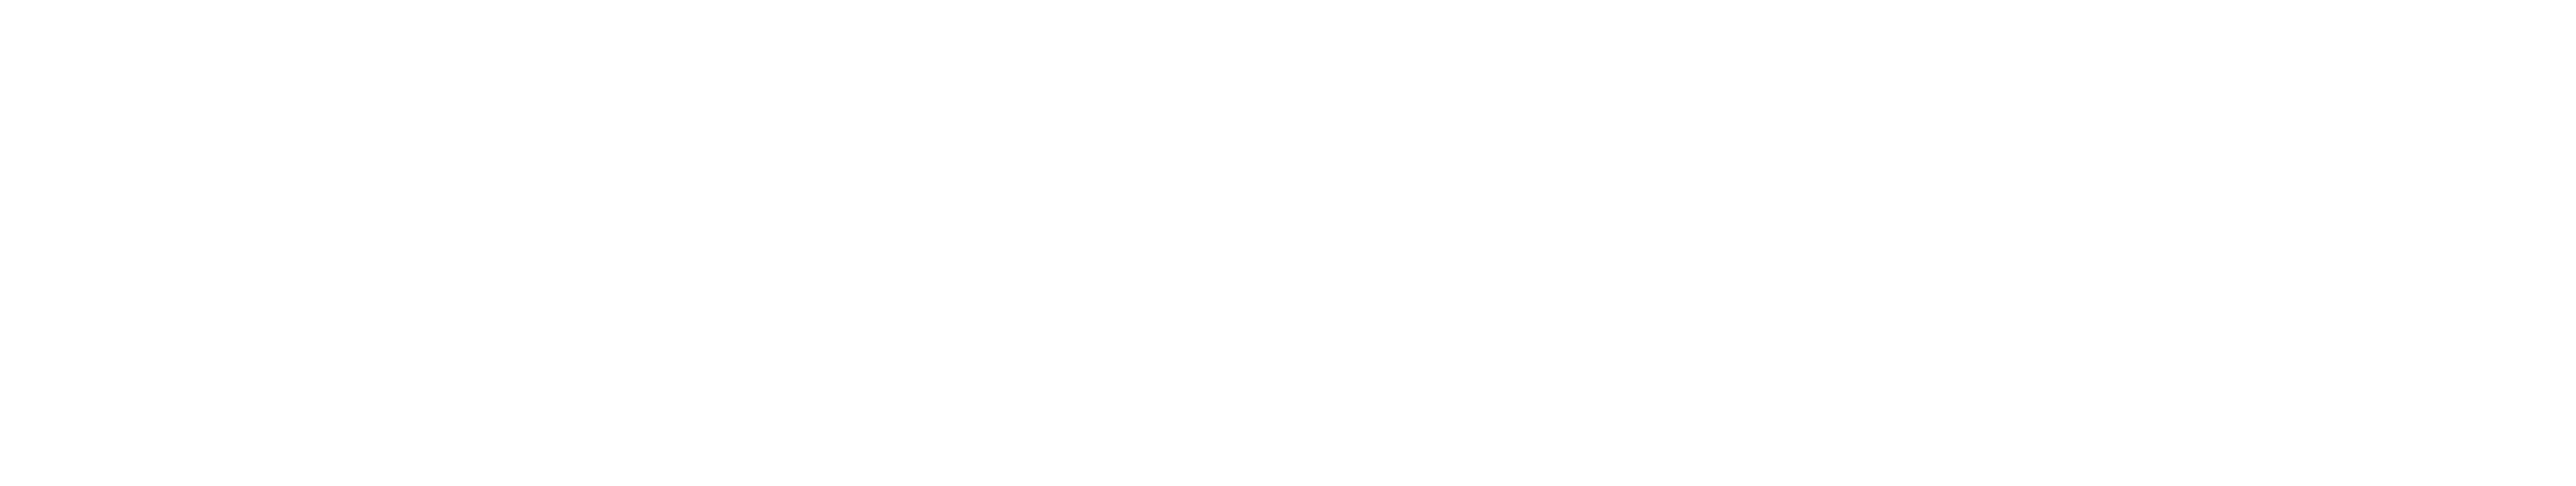 21-56-31-hyperpc-logo-wht.png